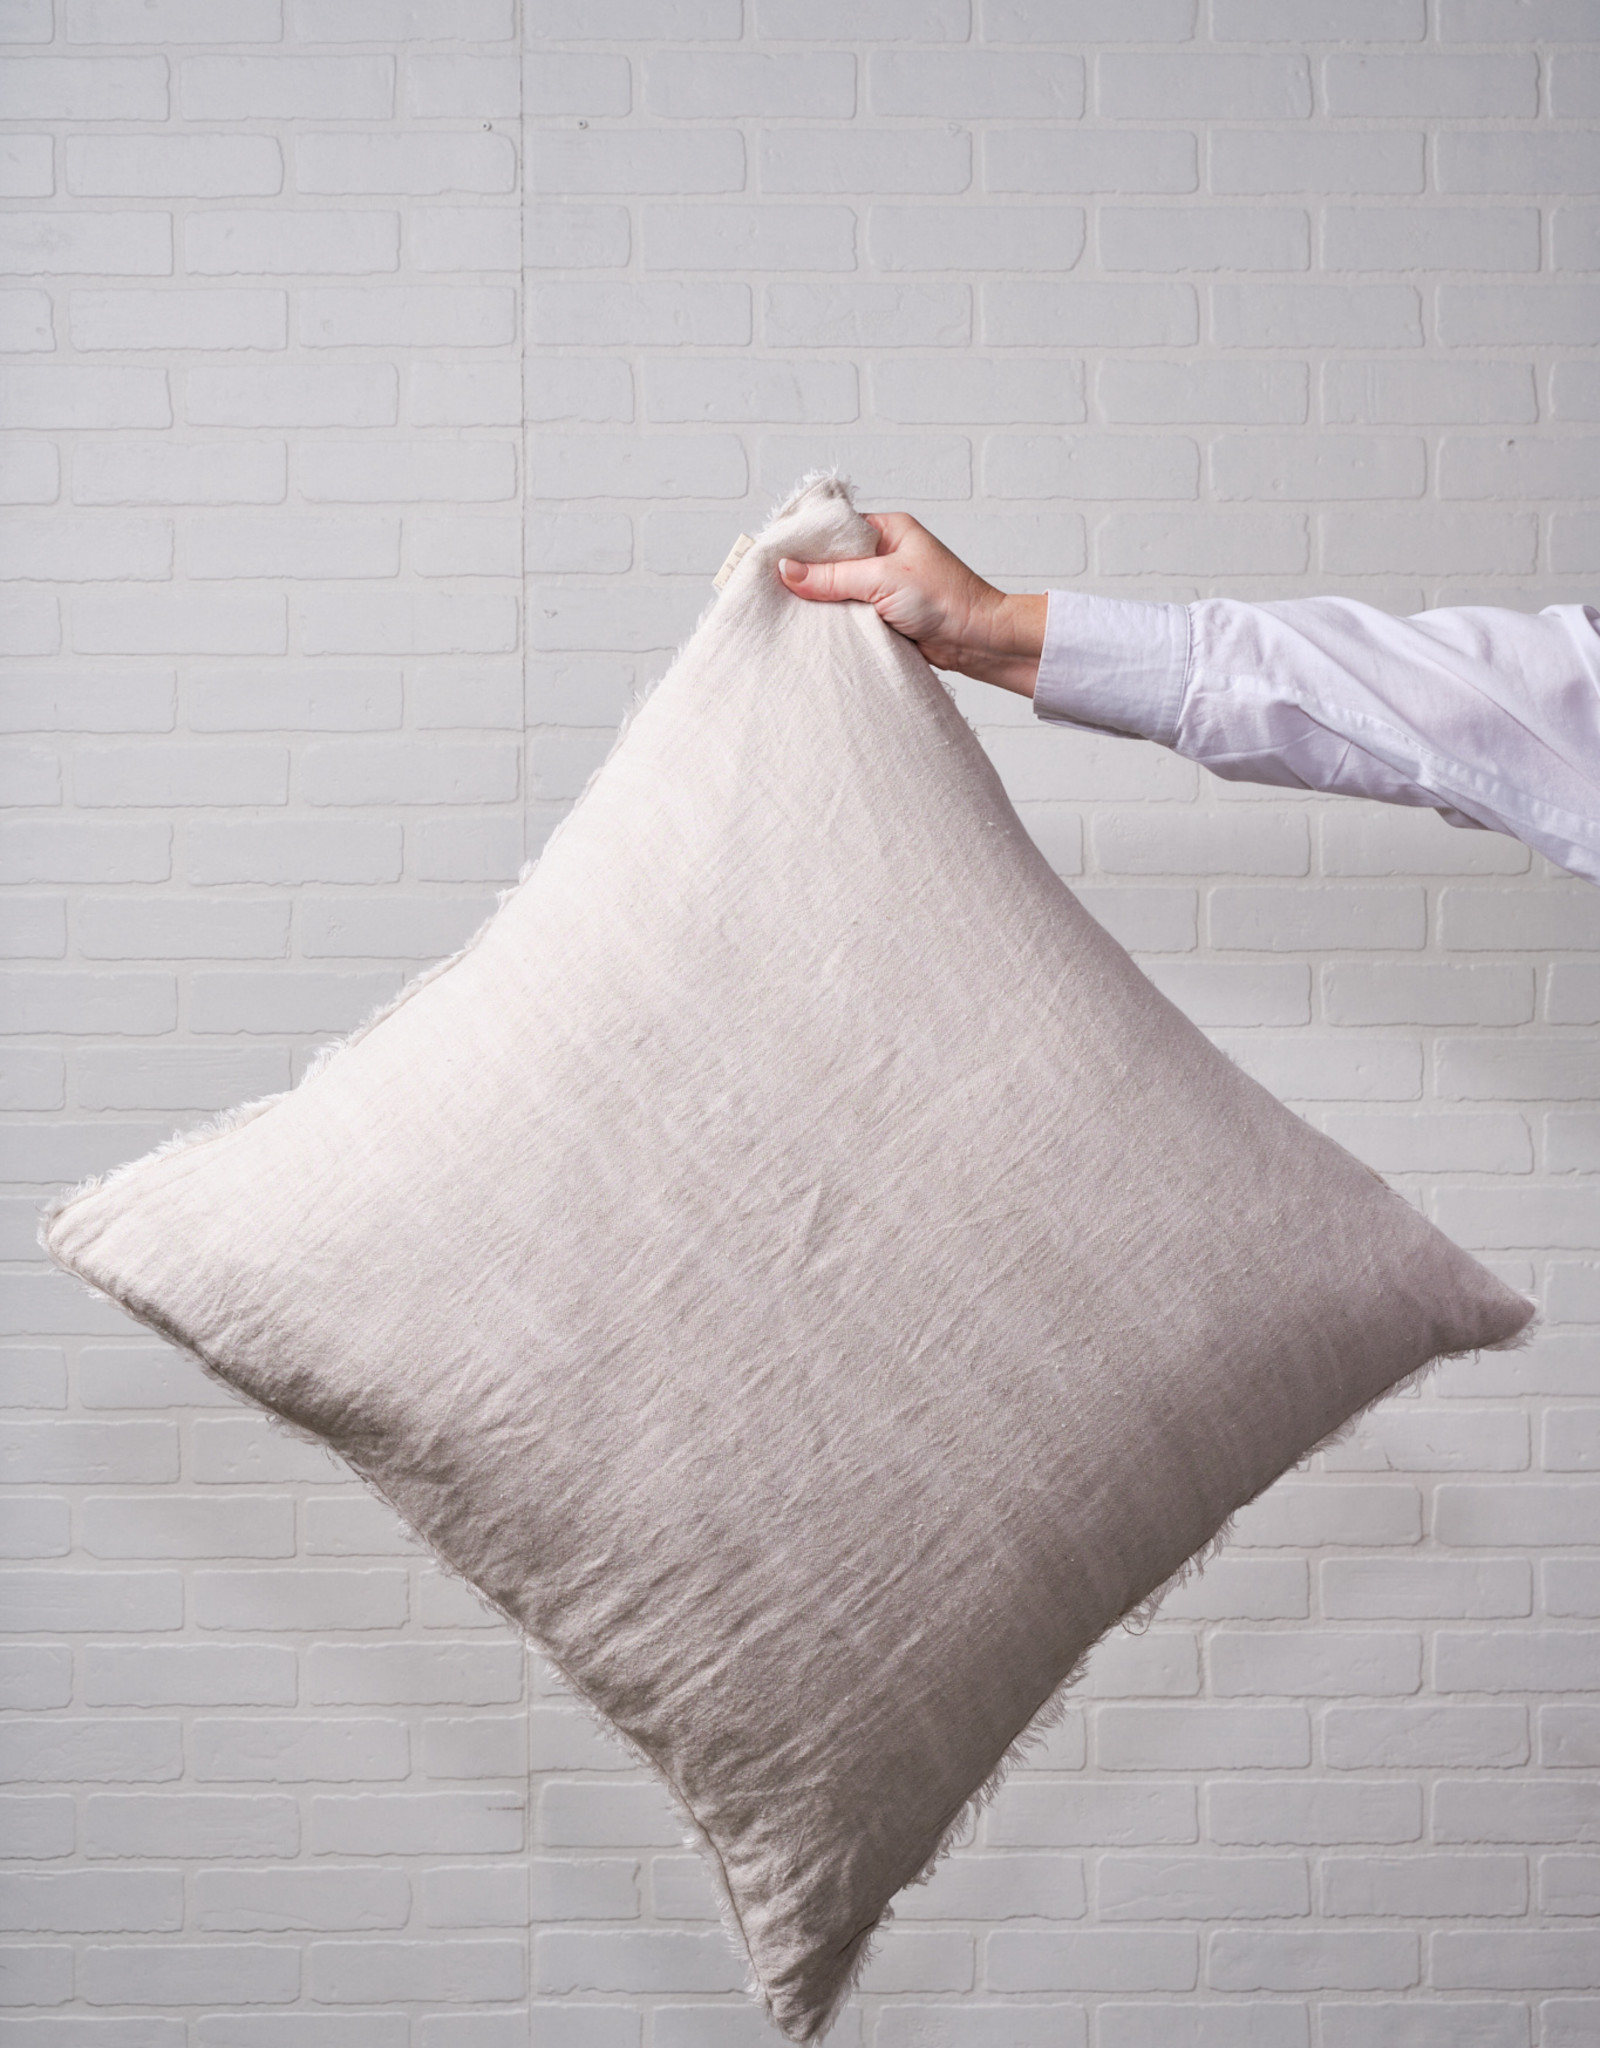 Lina Linen Pillow, Grey Stripe 24x24